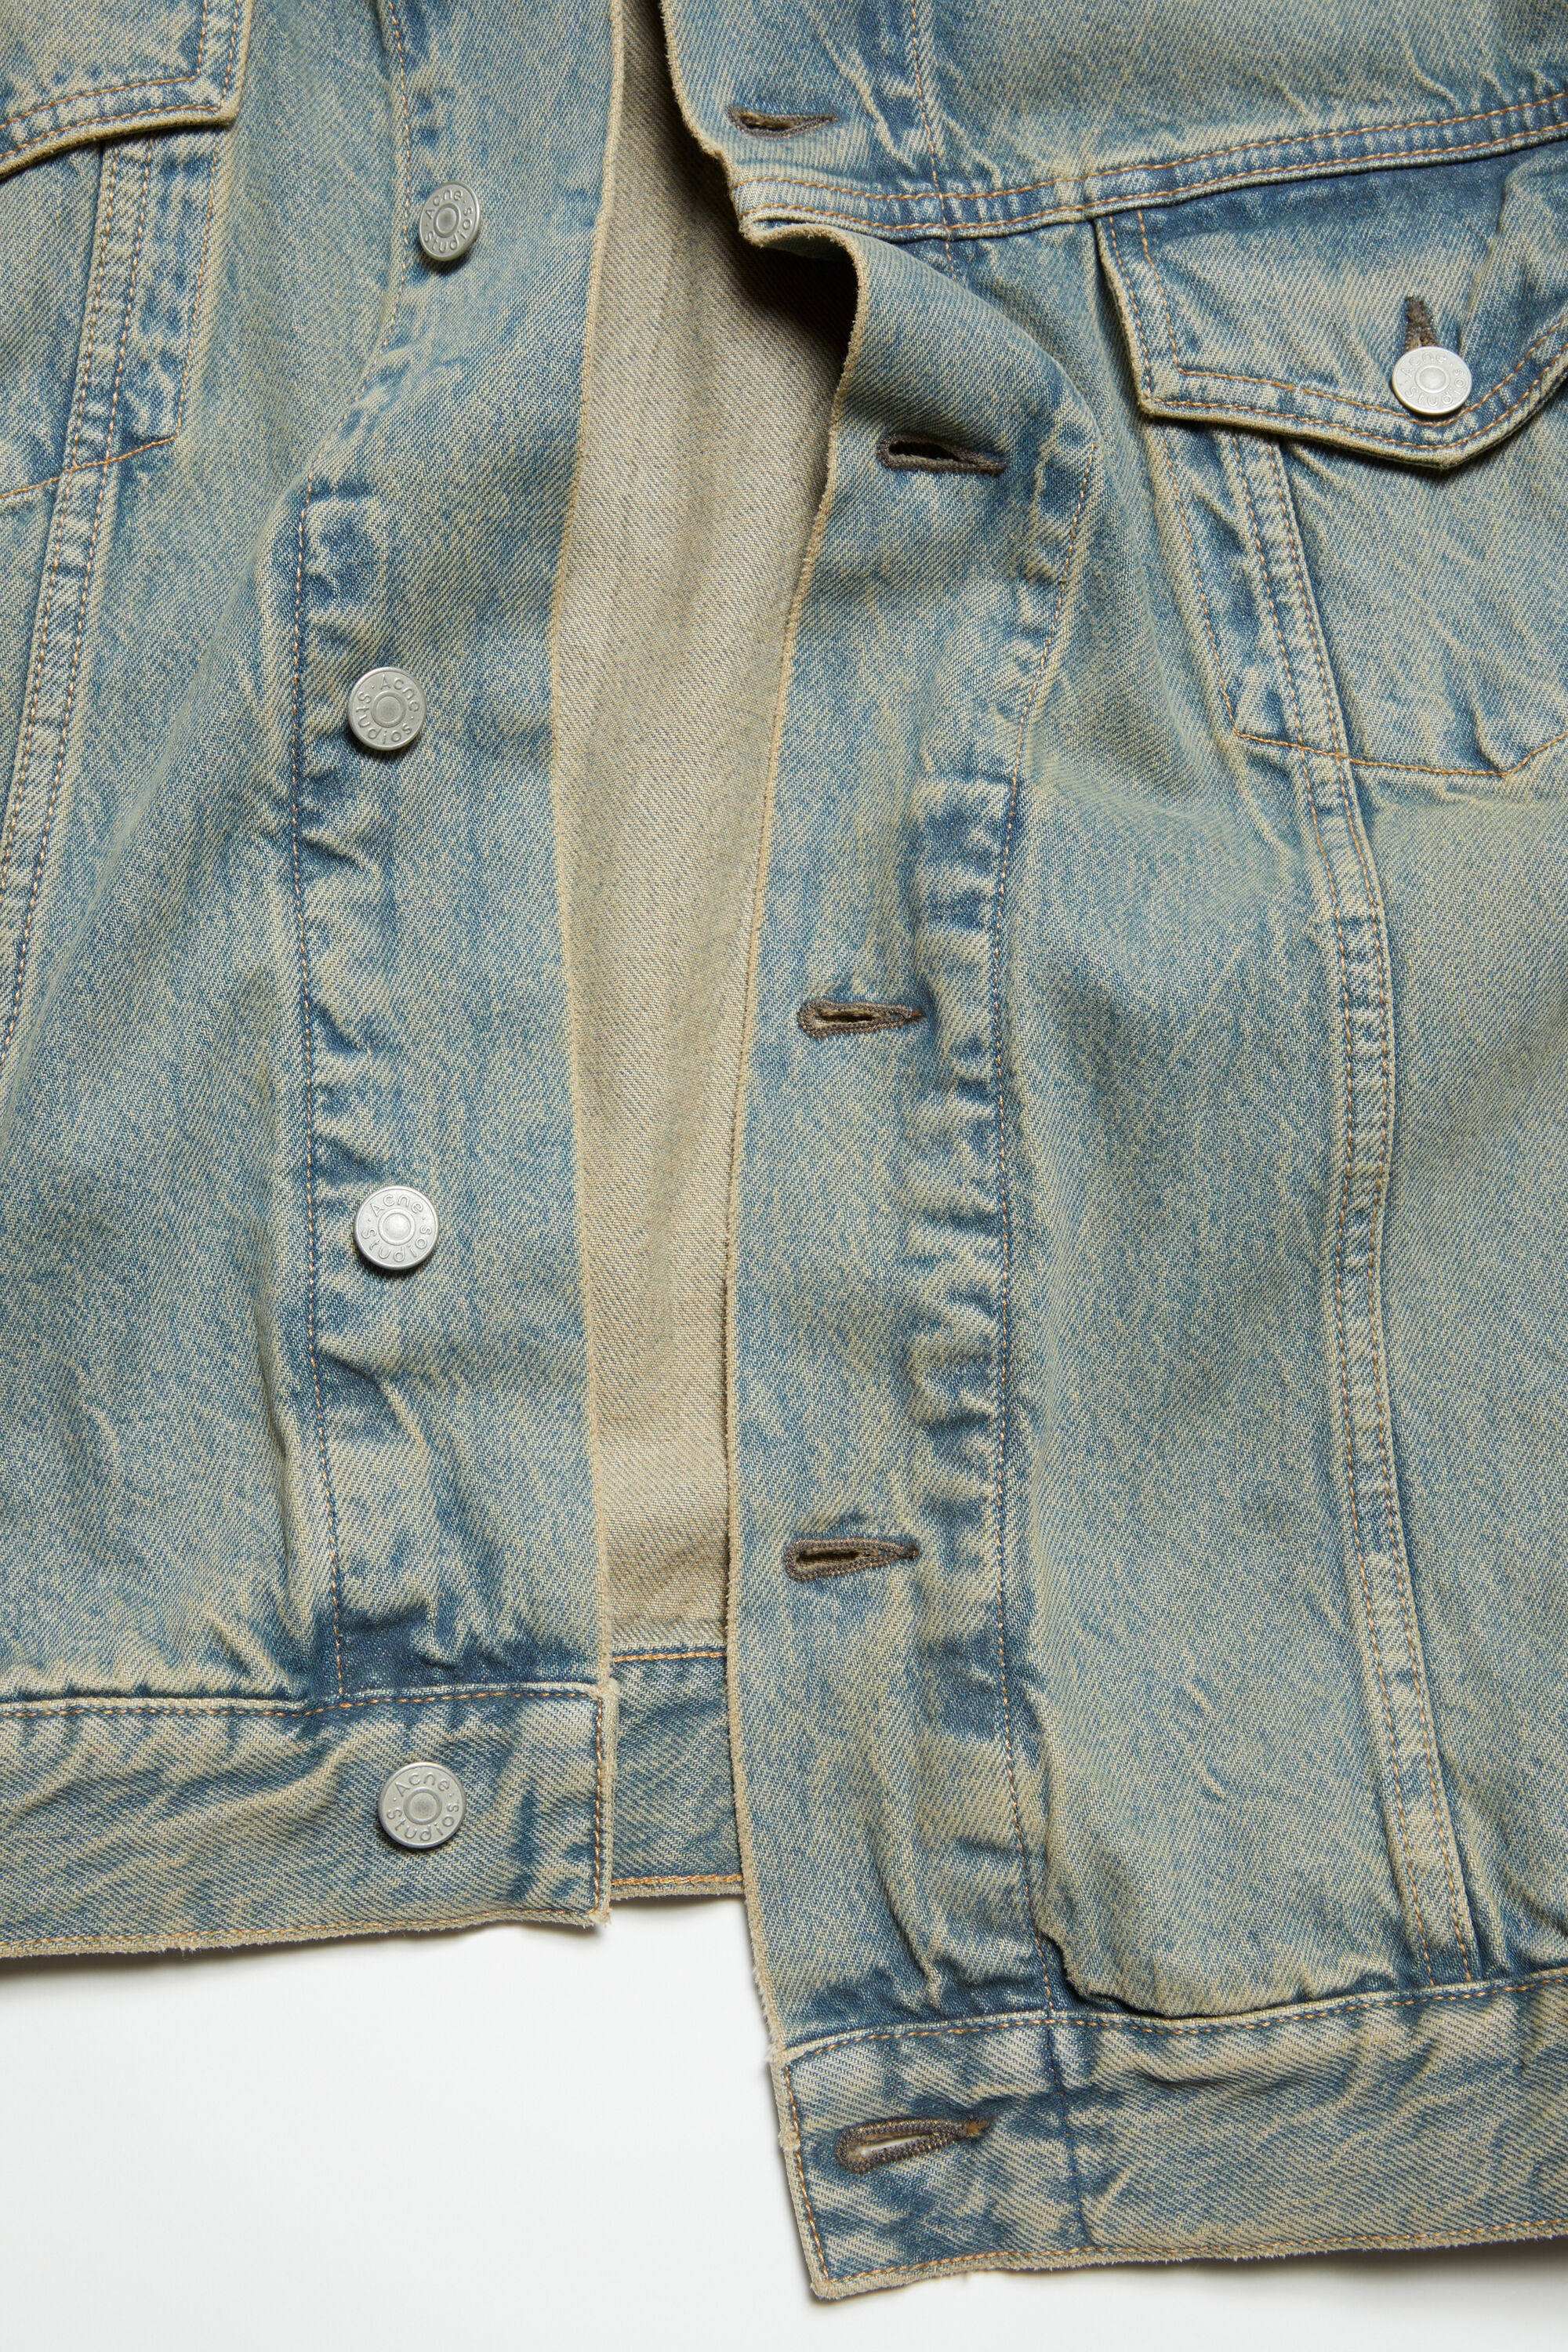 Acne Studios - Denim jacket - Oversized fit - Blue/beige